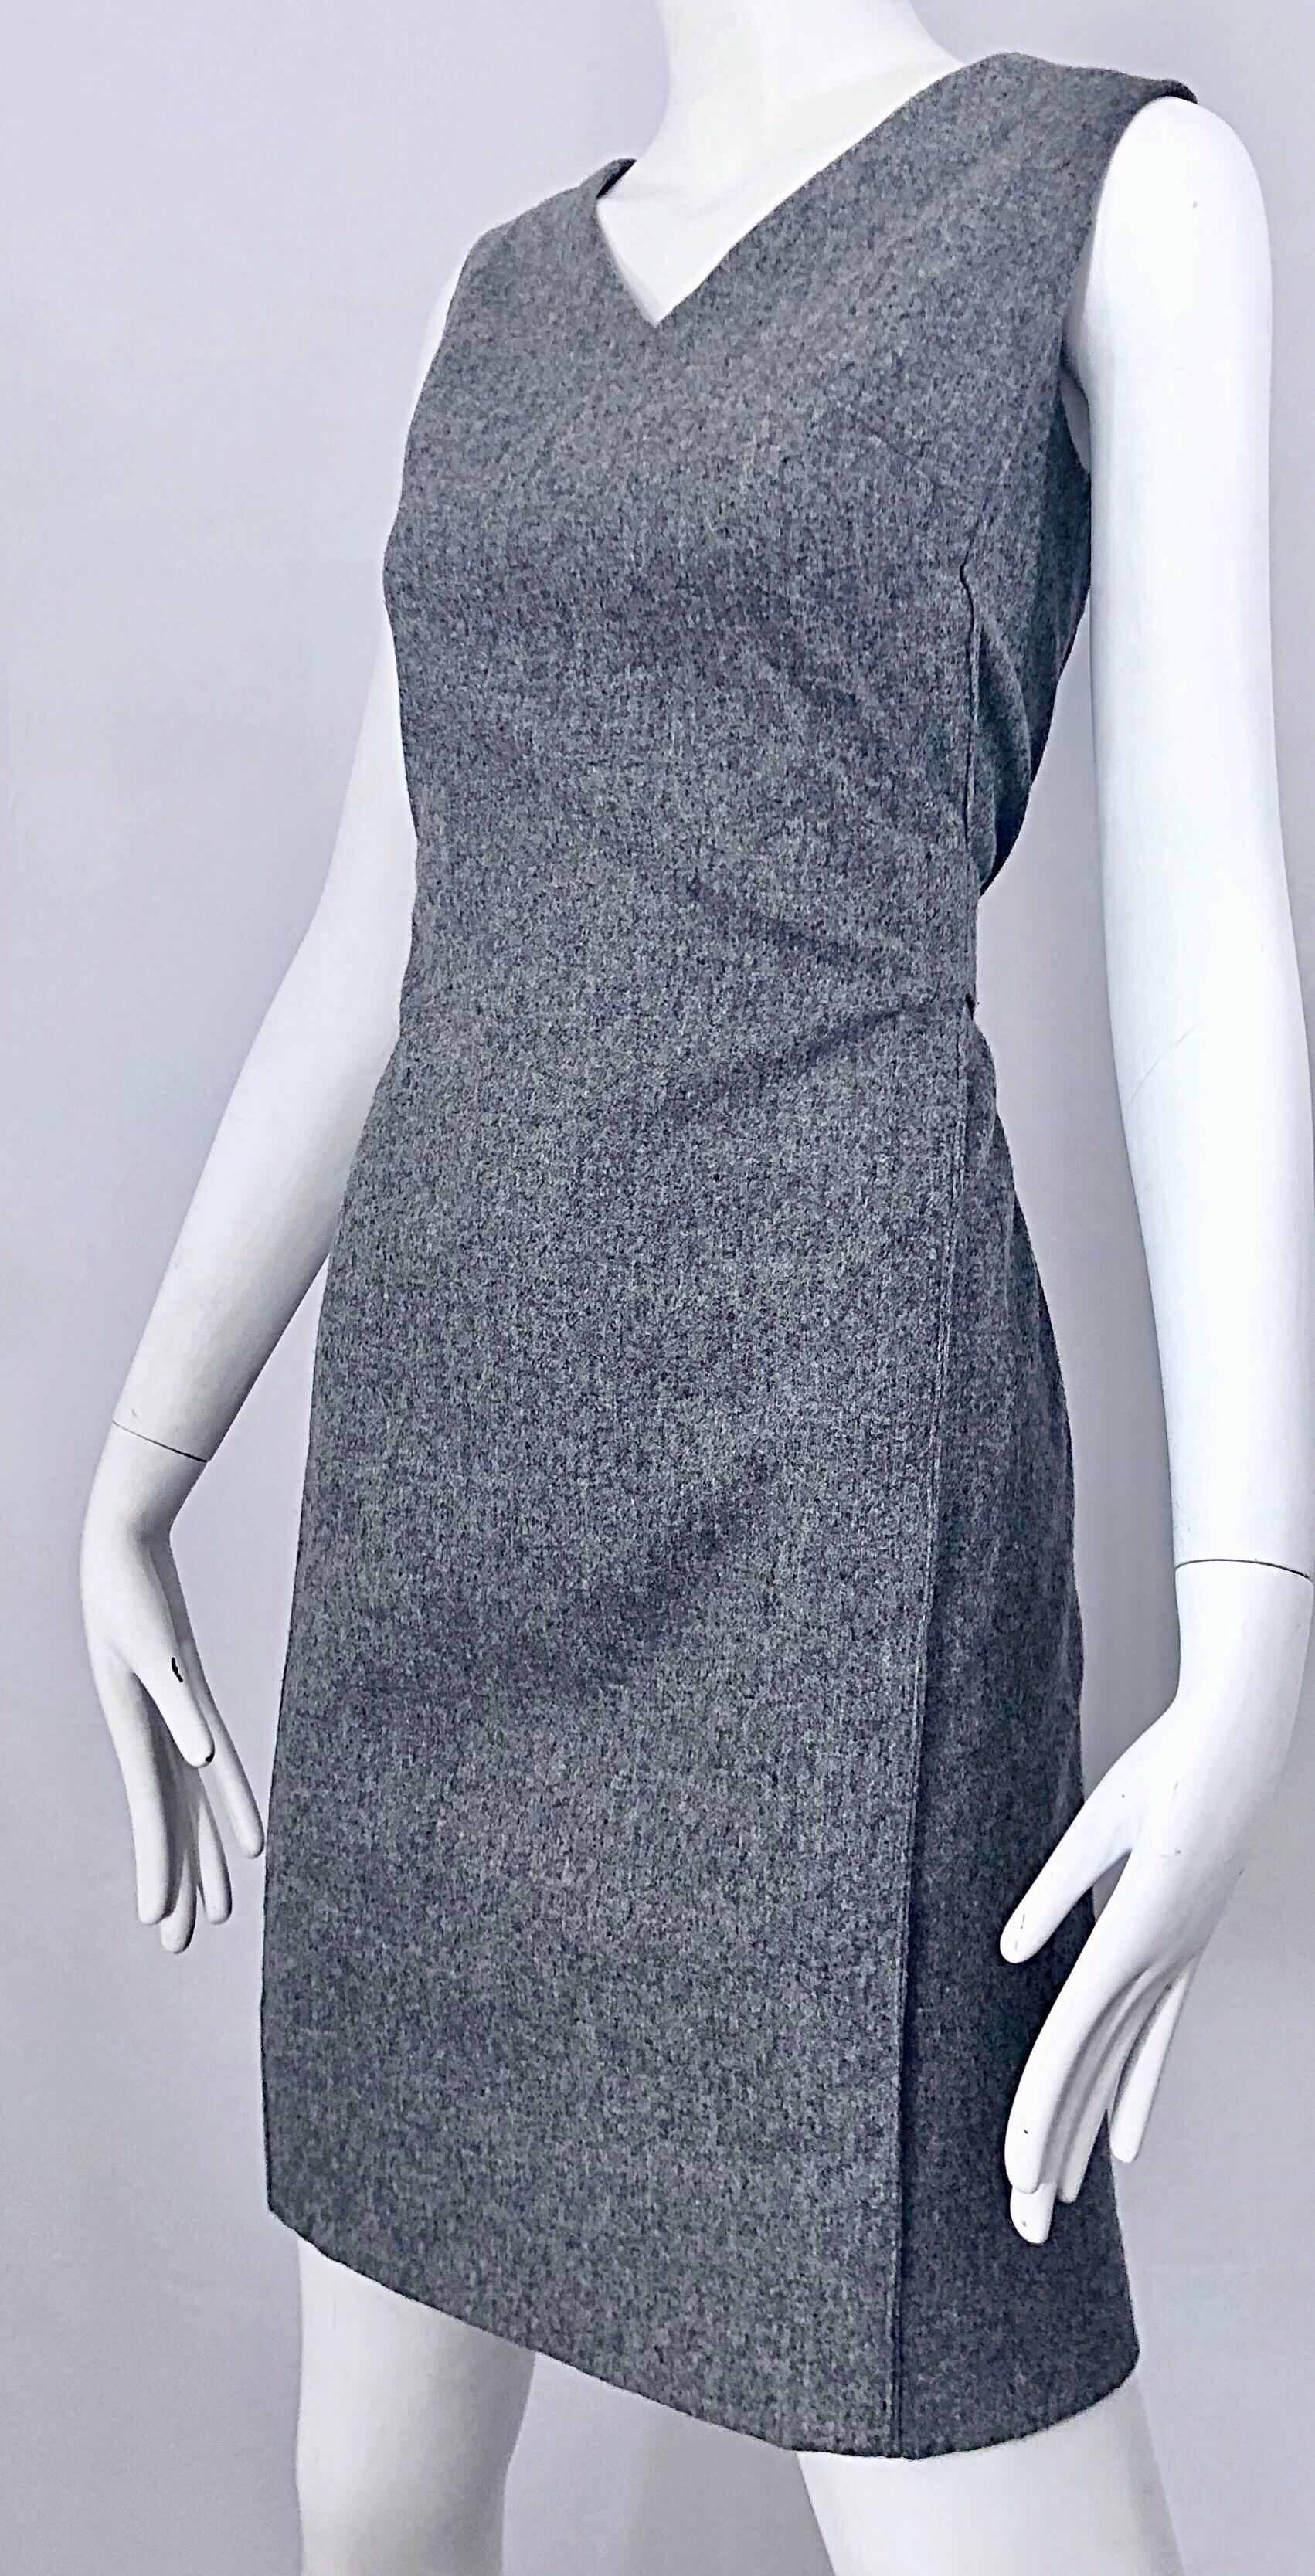 heather gray dresses